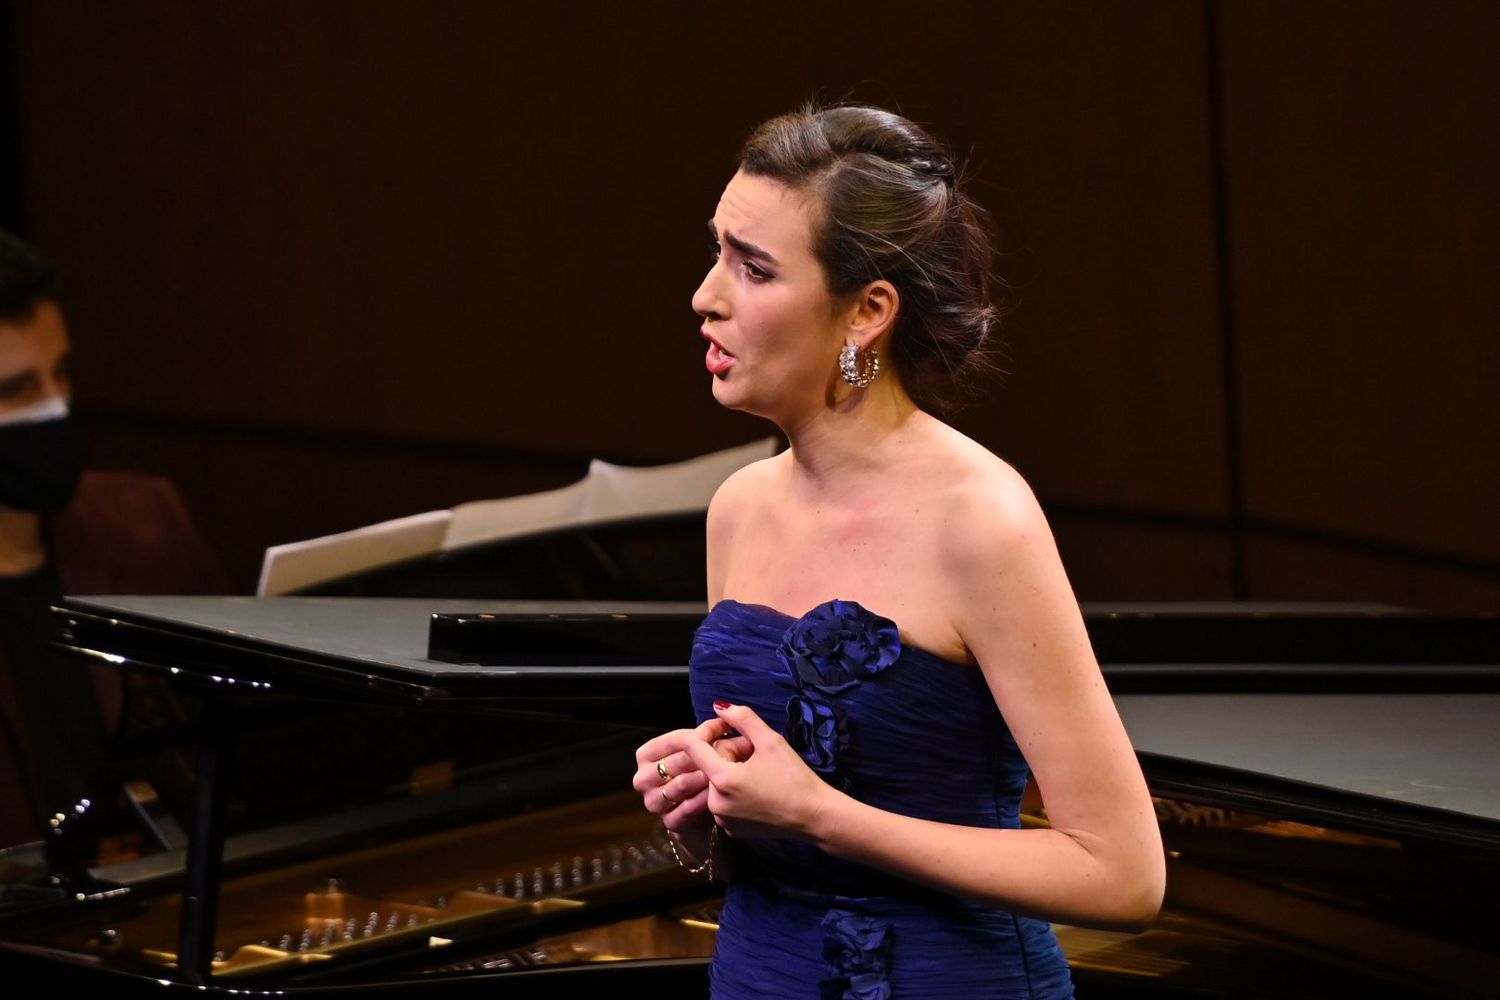 La mezzo-soprano espagnole Carmen Artaza obtient le premier prix du 58e Concours ténor Viñas